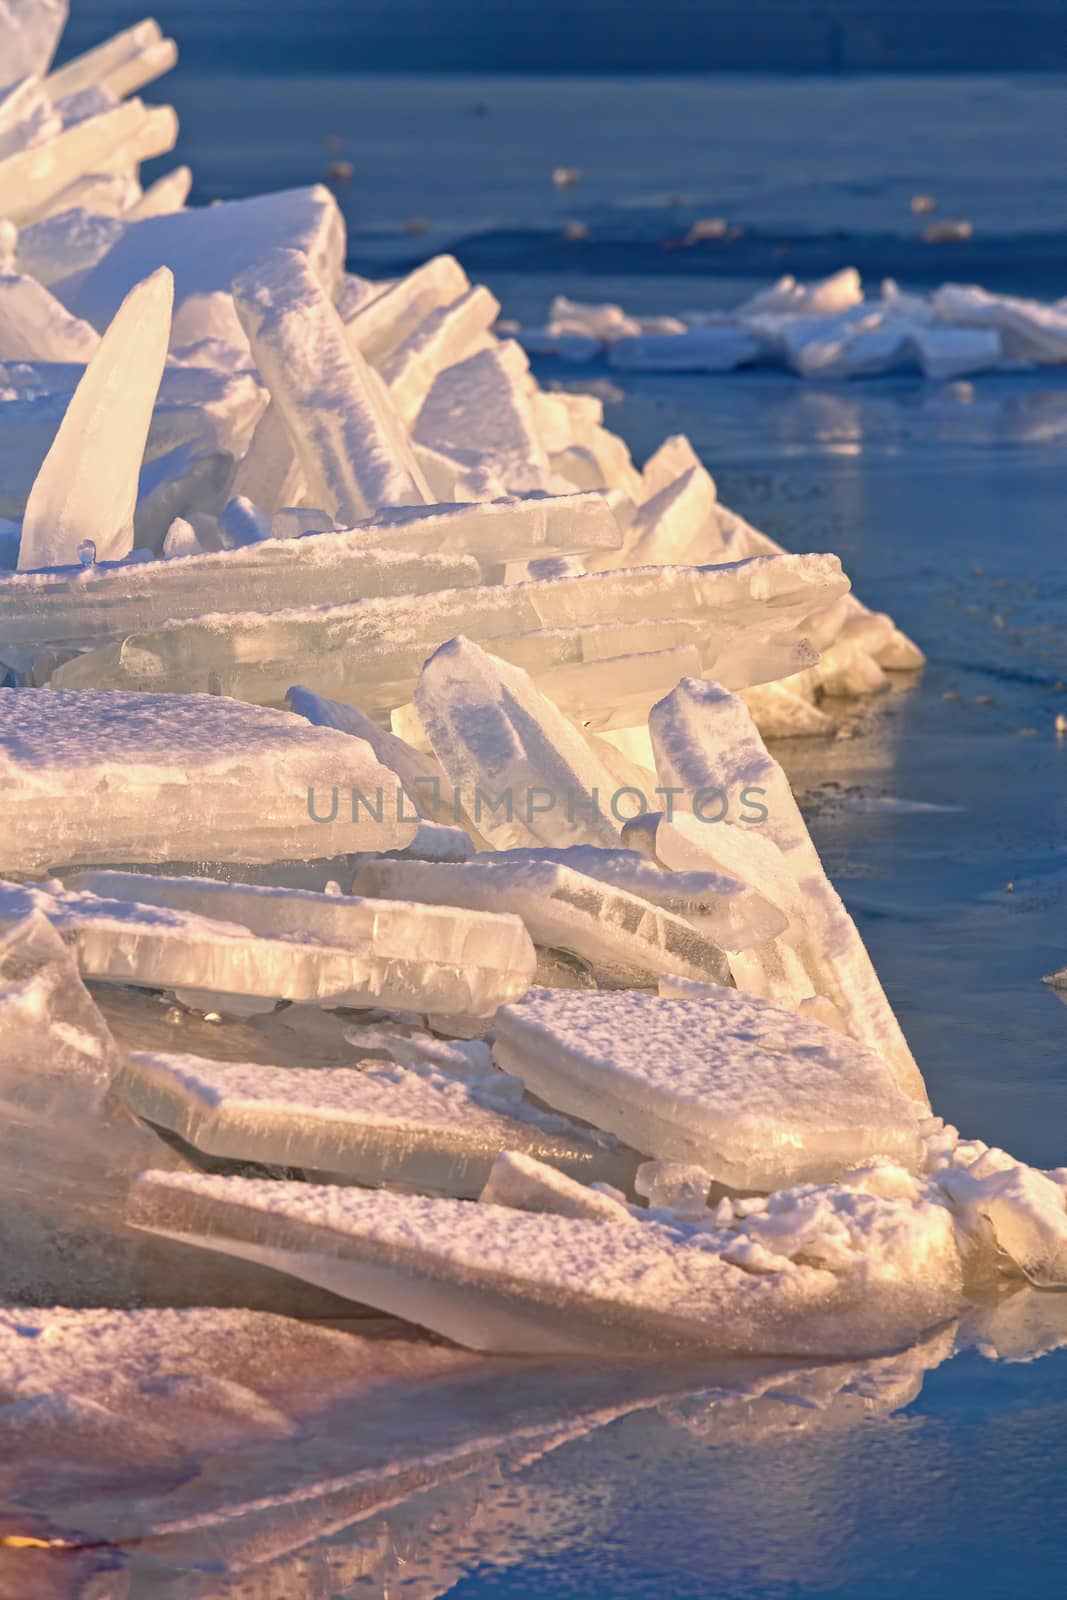 Many iceblocks on each other in Lake Balaton by Digoarpi